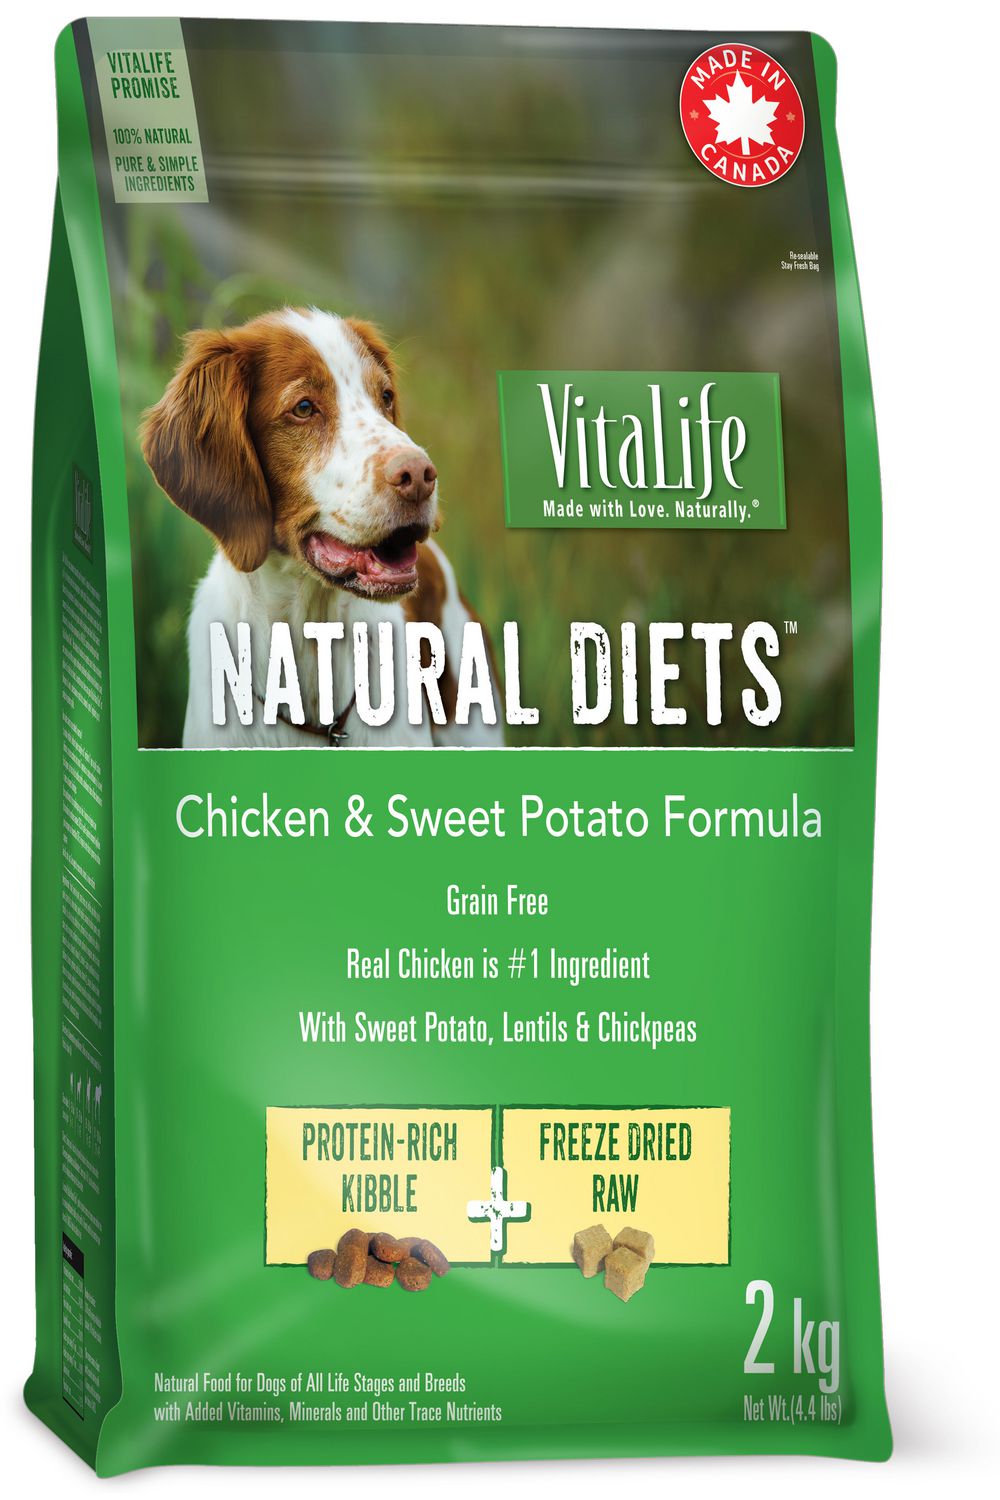 加拿大國寶 天然無穀犬糧+凍乾-雞肉&甜薯配方
VitaLife Natural Diets Chicken & Sweet Potato Formula Dog Food